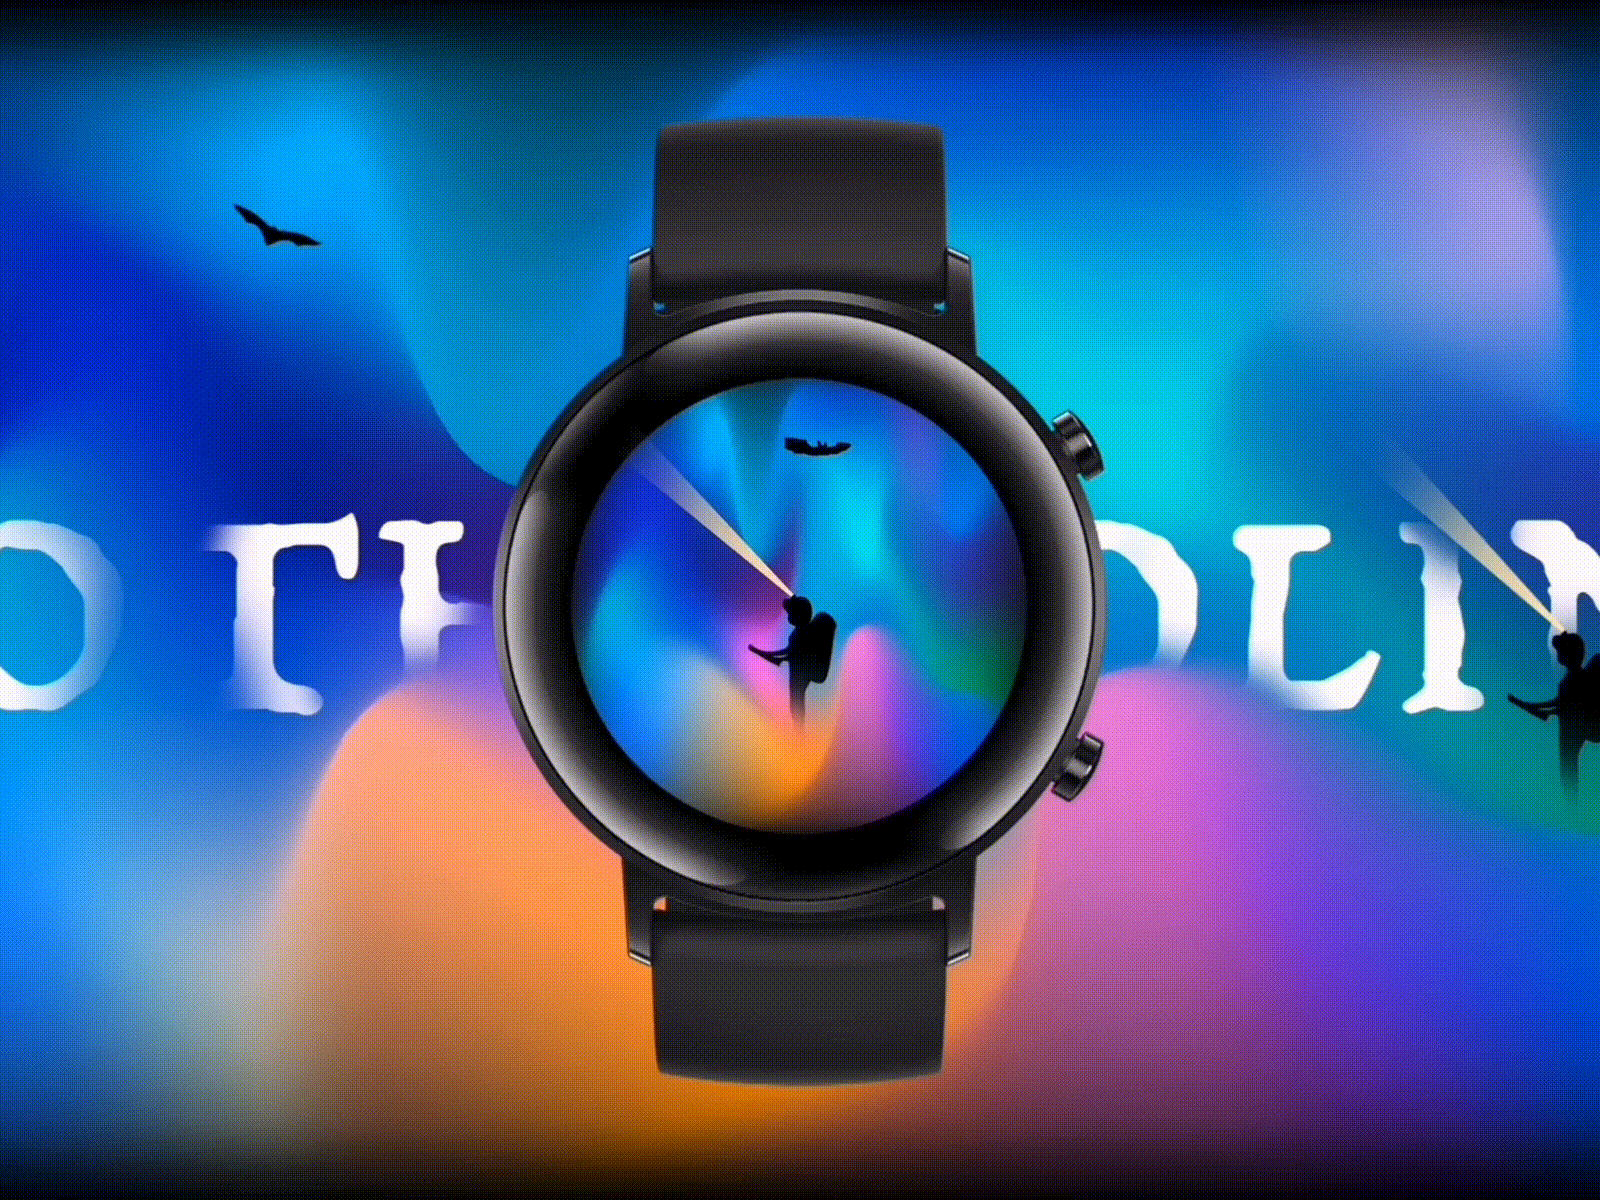 Potholing Watch theme design design illustration theme ui ux watch